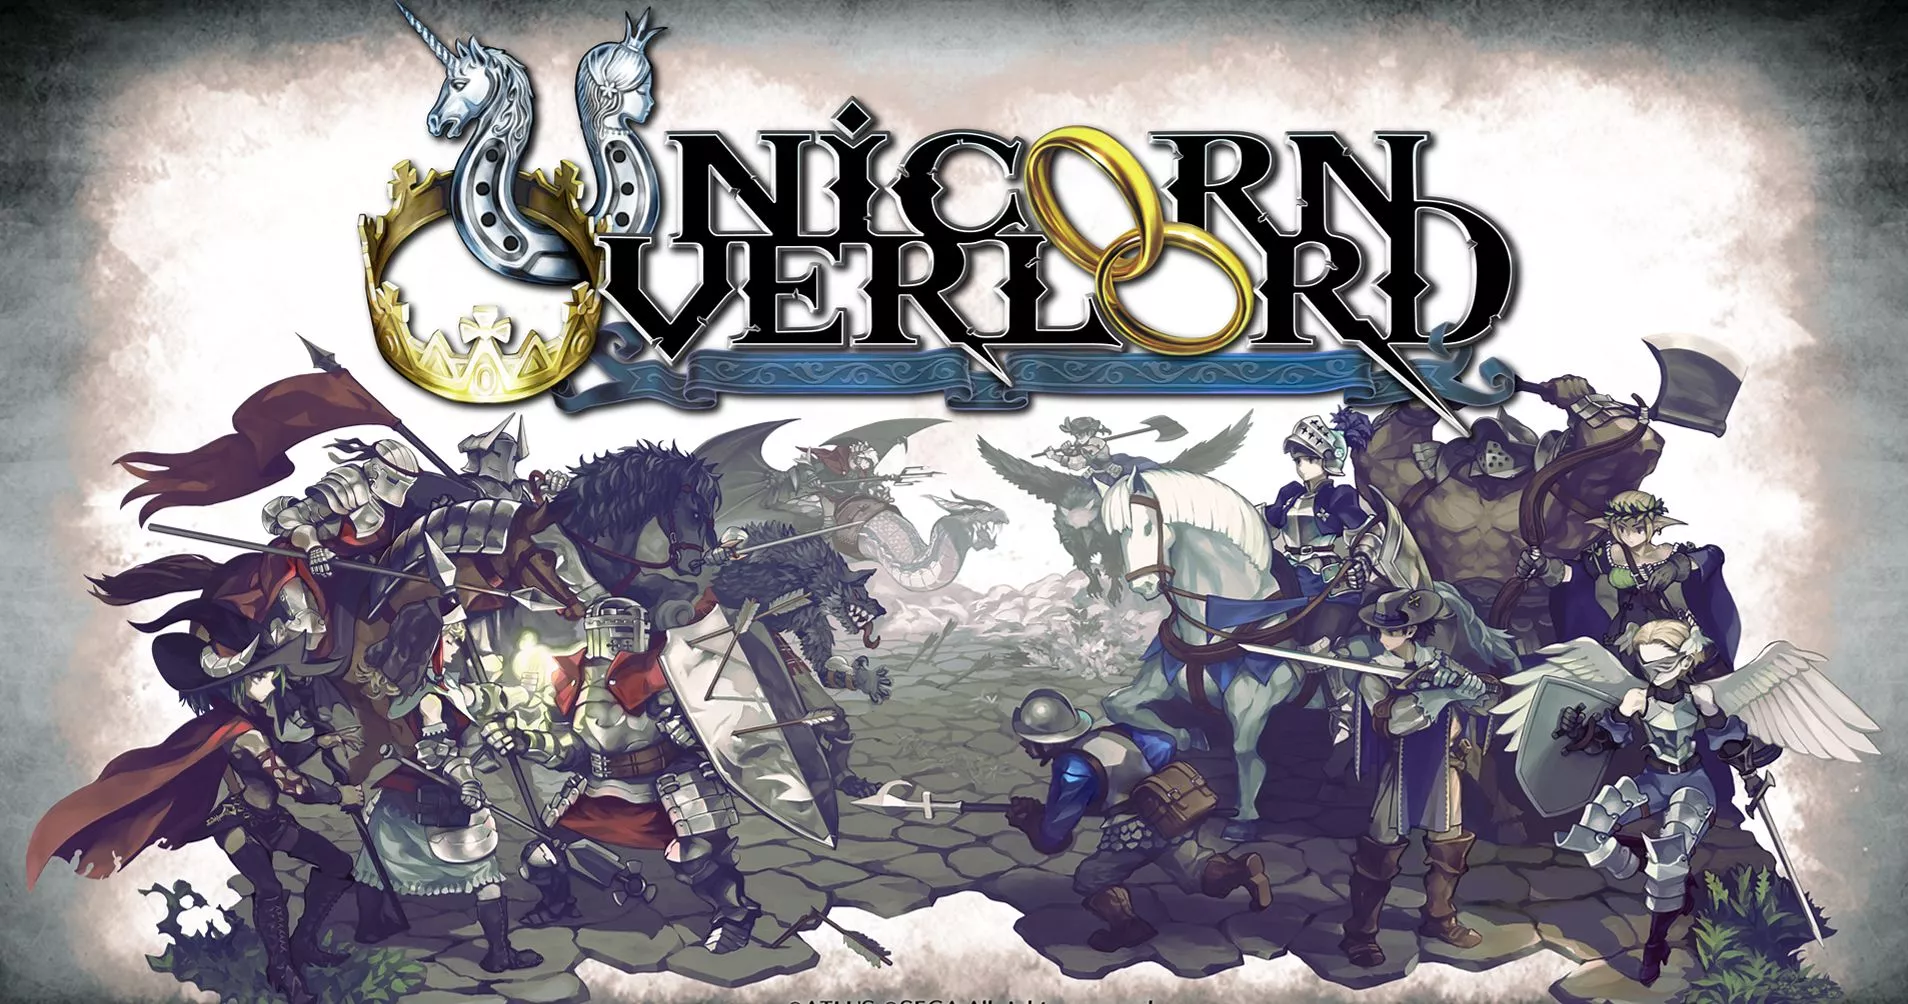 Unicorn Overlord: Entwickler Vanillaware erläutern die Gameplay-Mechaniken ihres Taktik-RPGs Heropic